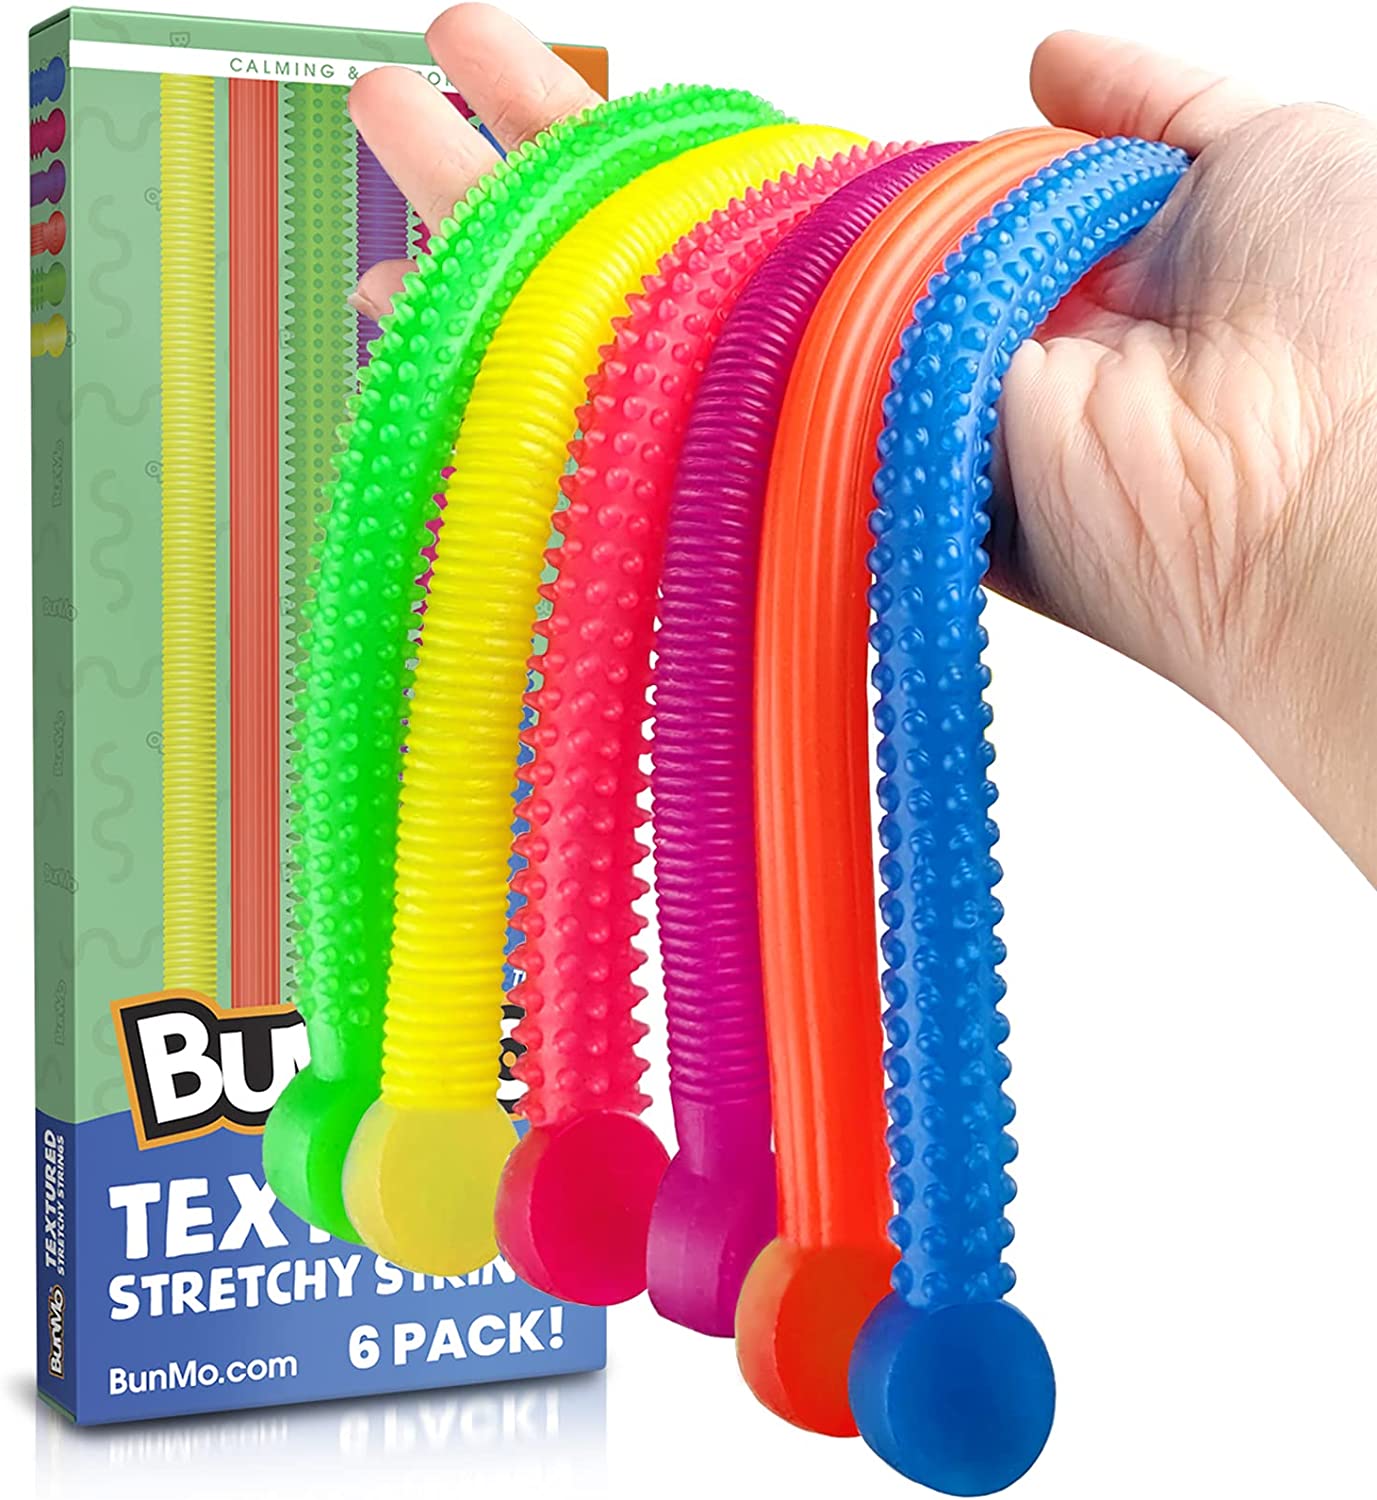 Squishy Textured Stretchy Strings Fidget Toy Bumpy面条拉拉乐